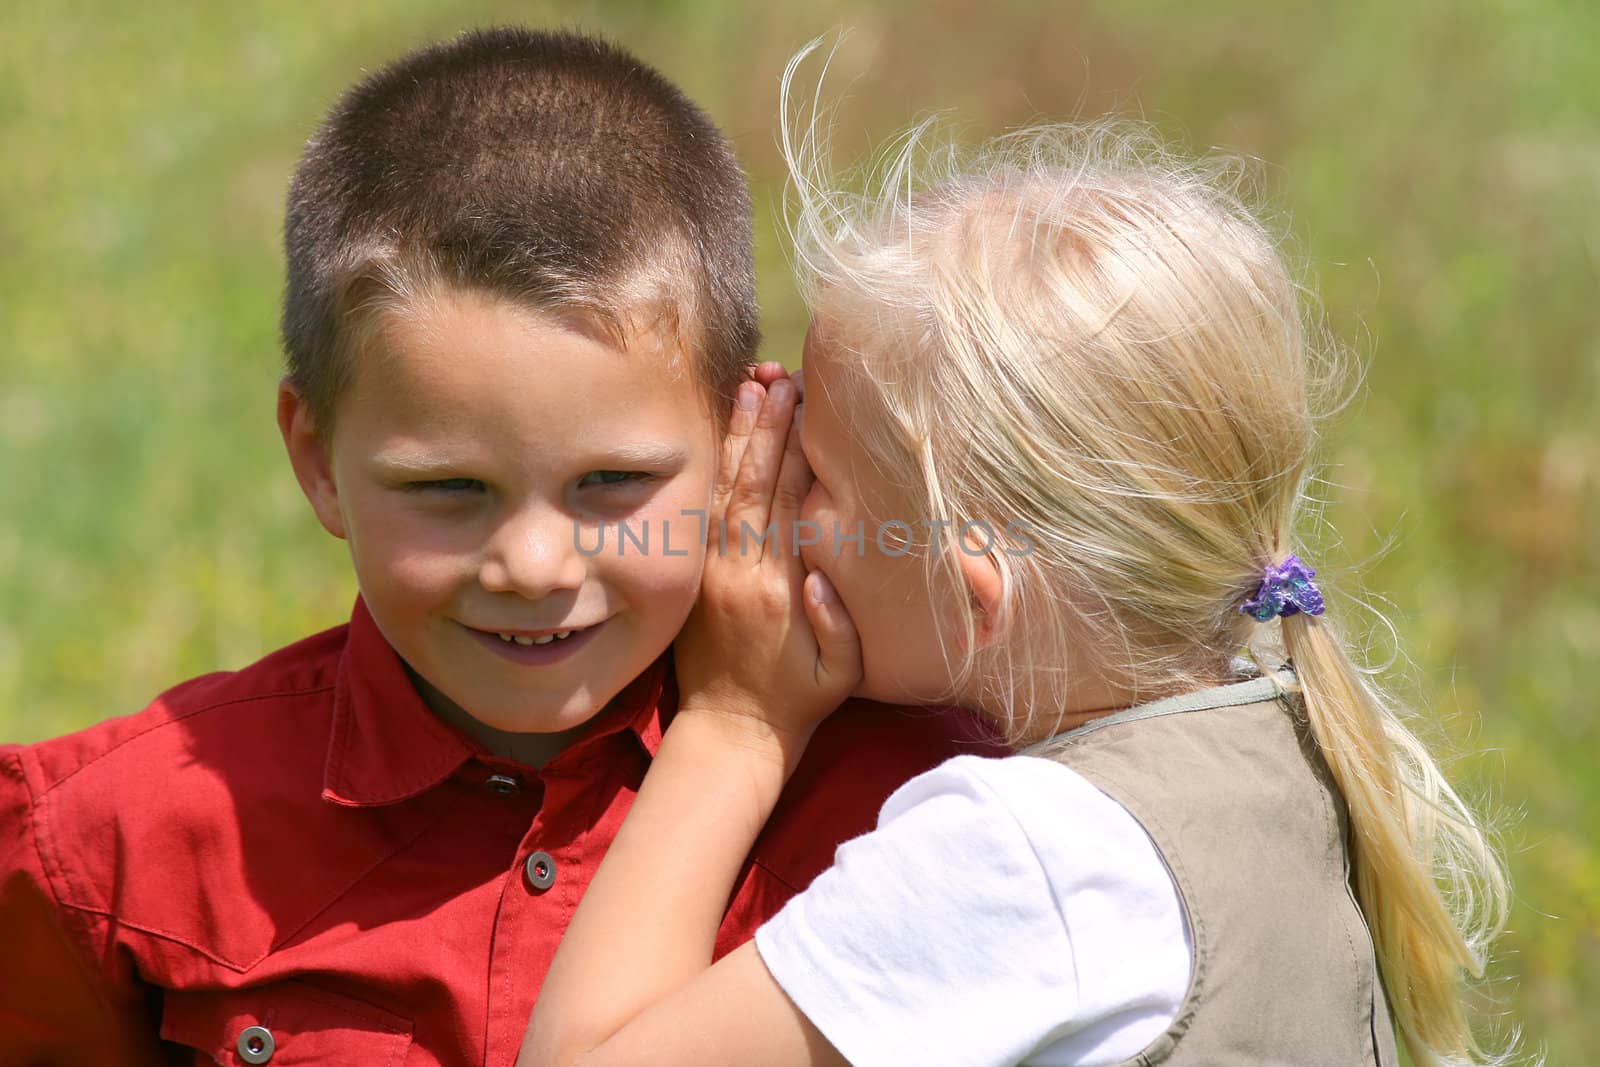 Girl whispering secret to a smiling boy